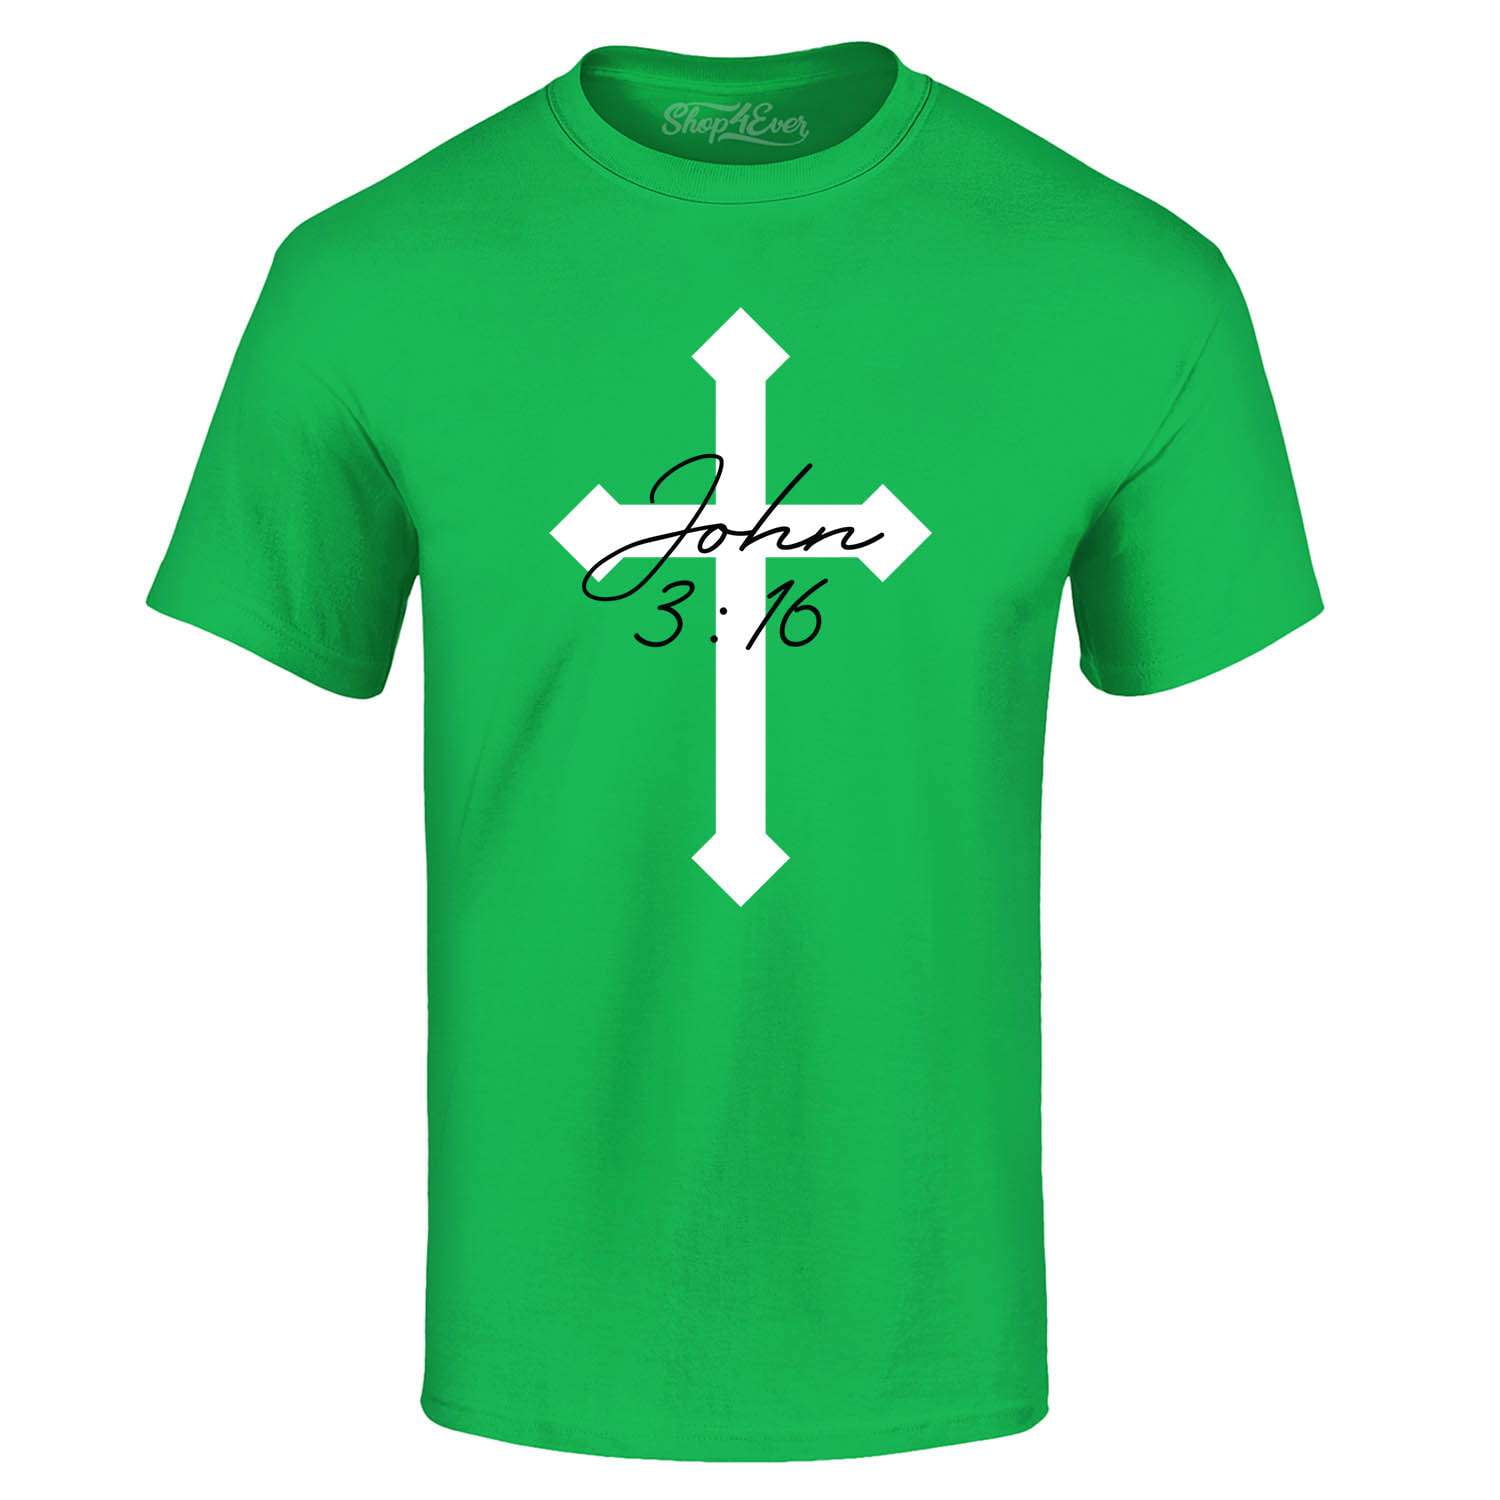 Shop4Ever Men's John 3:16 Bible Verse Script Cross Graphic T-shirt ...